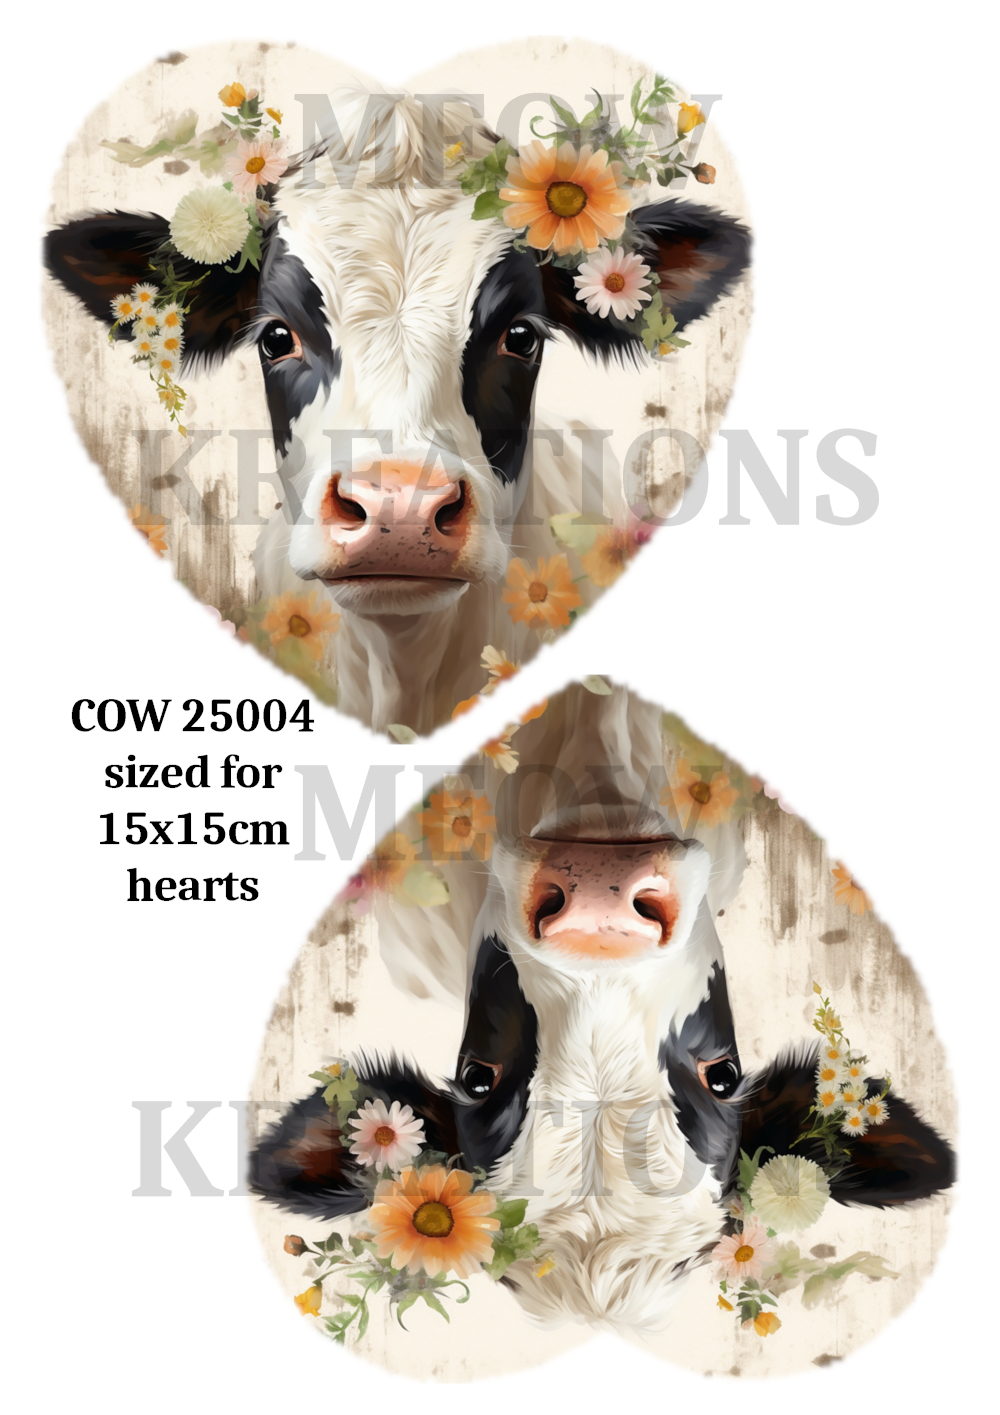 COW 25004